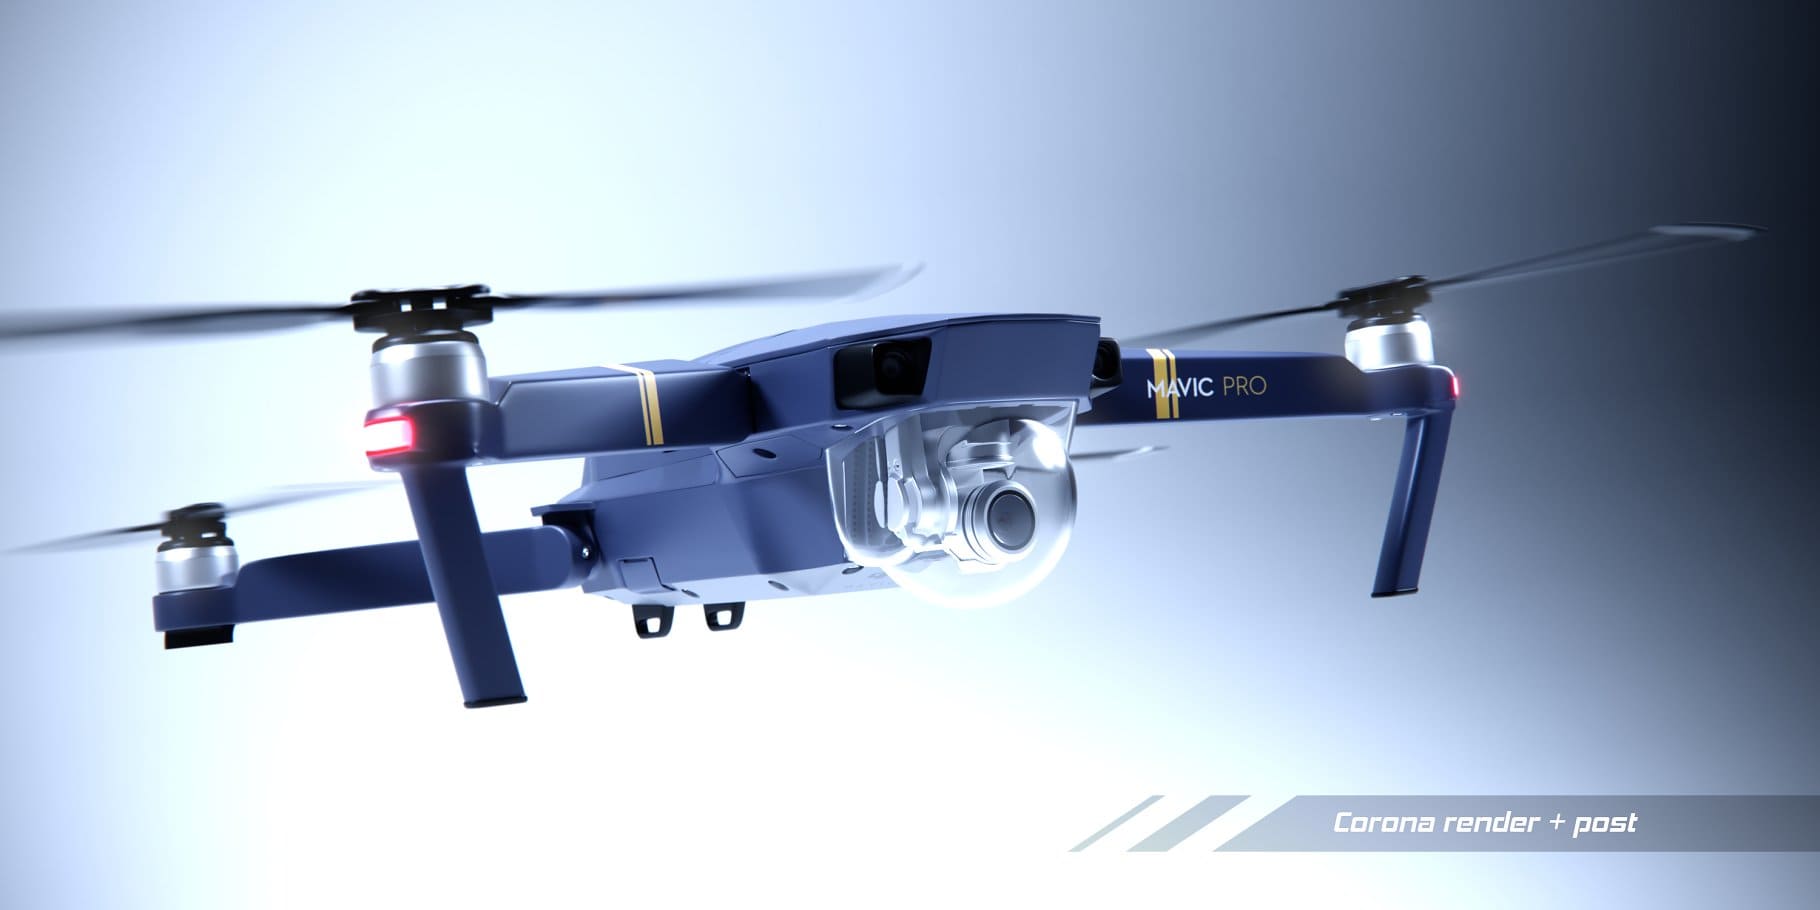 3d model of the flying blue quadcopter Dji mavic pro.